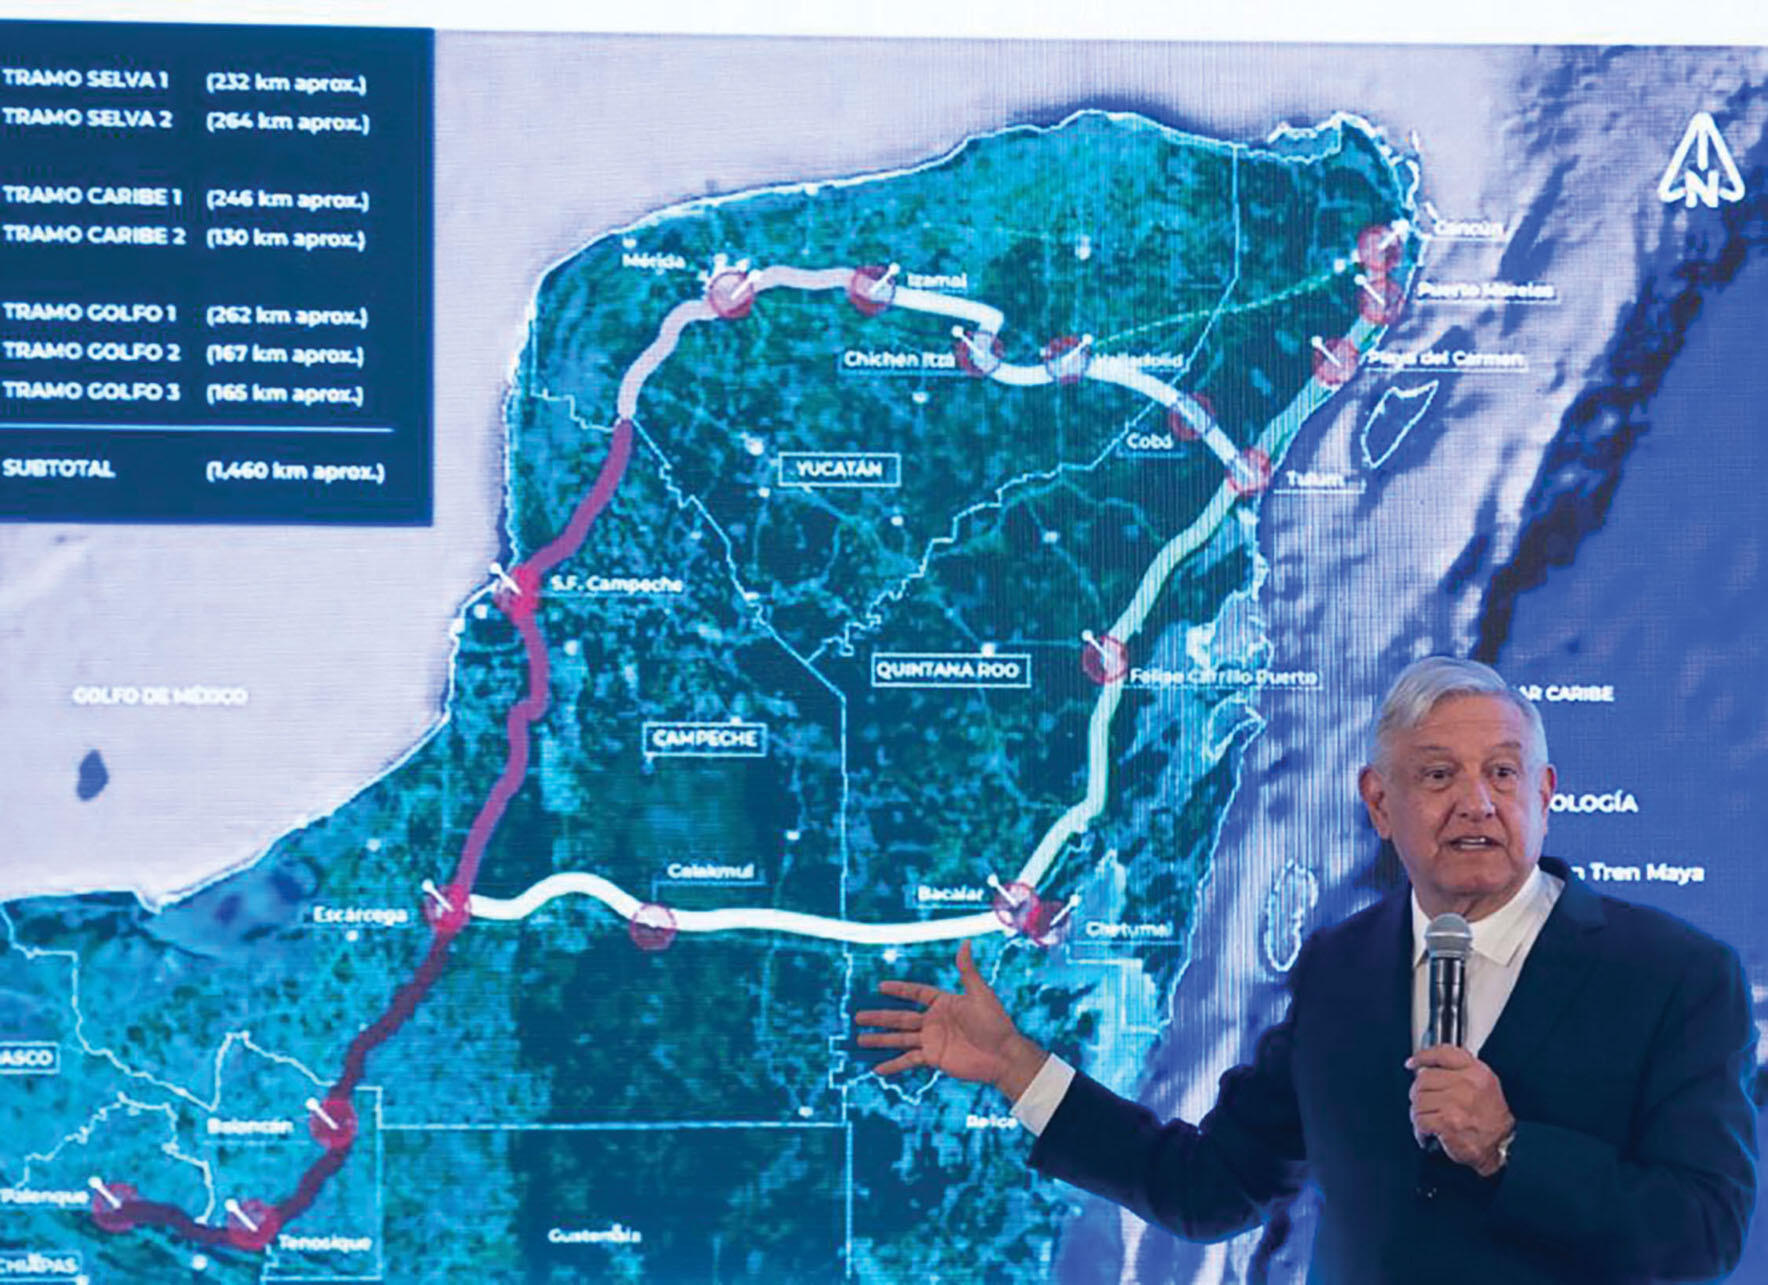 López Obrador discusses plans for the Tren Maya. (Photo courtesy of the Presidencia de la República Mexicana.)